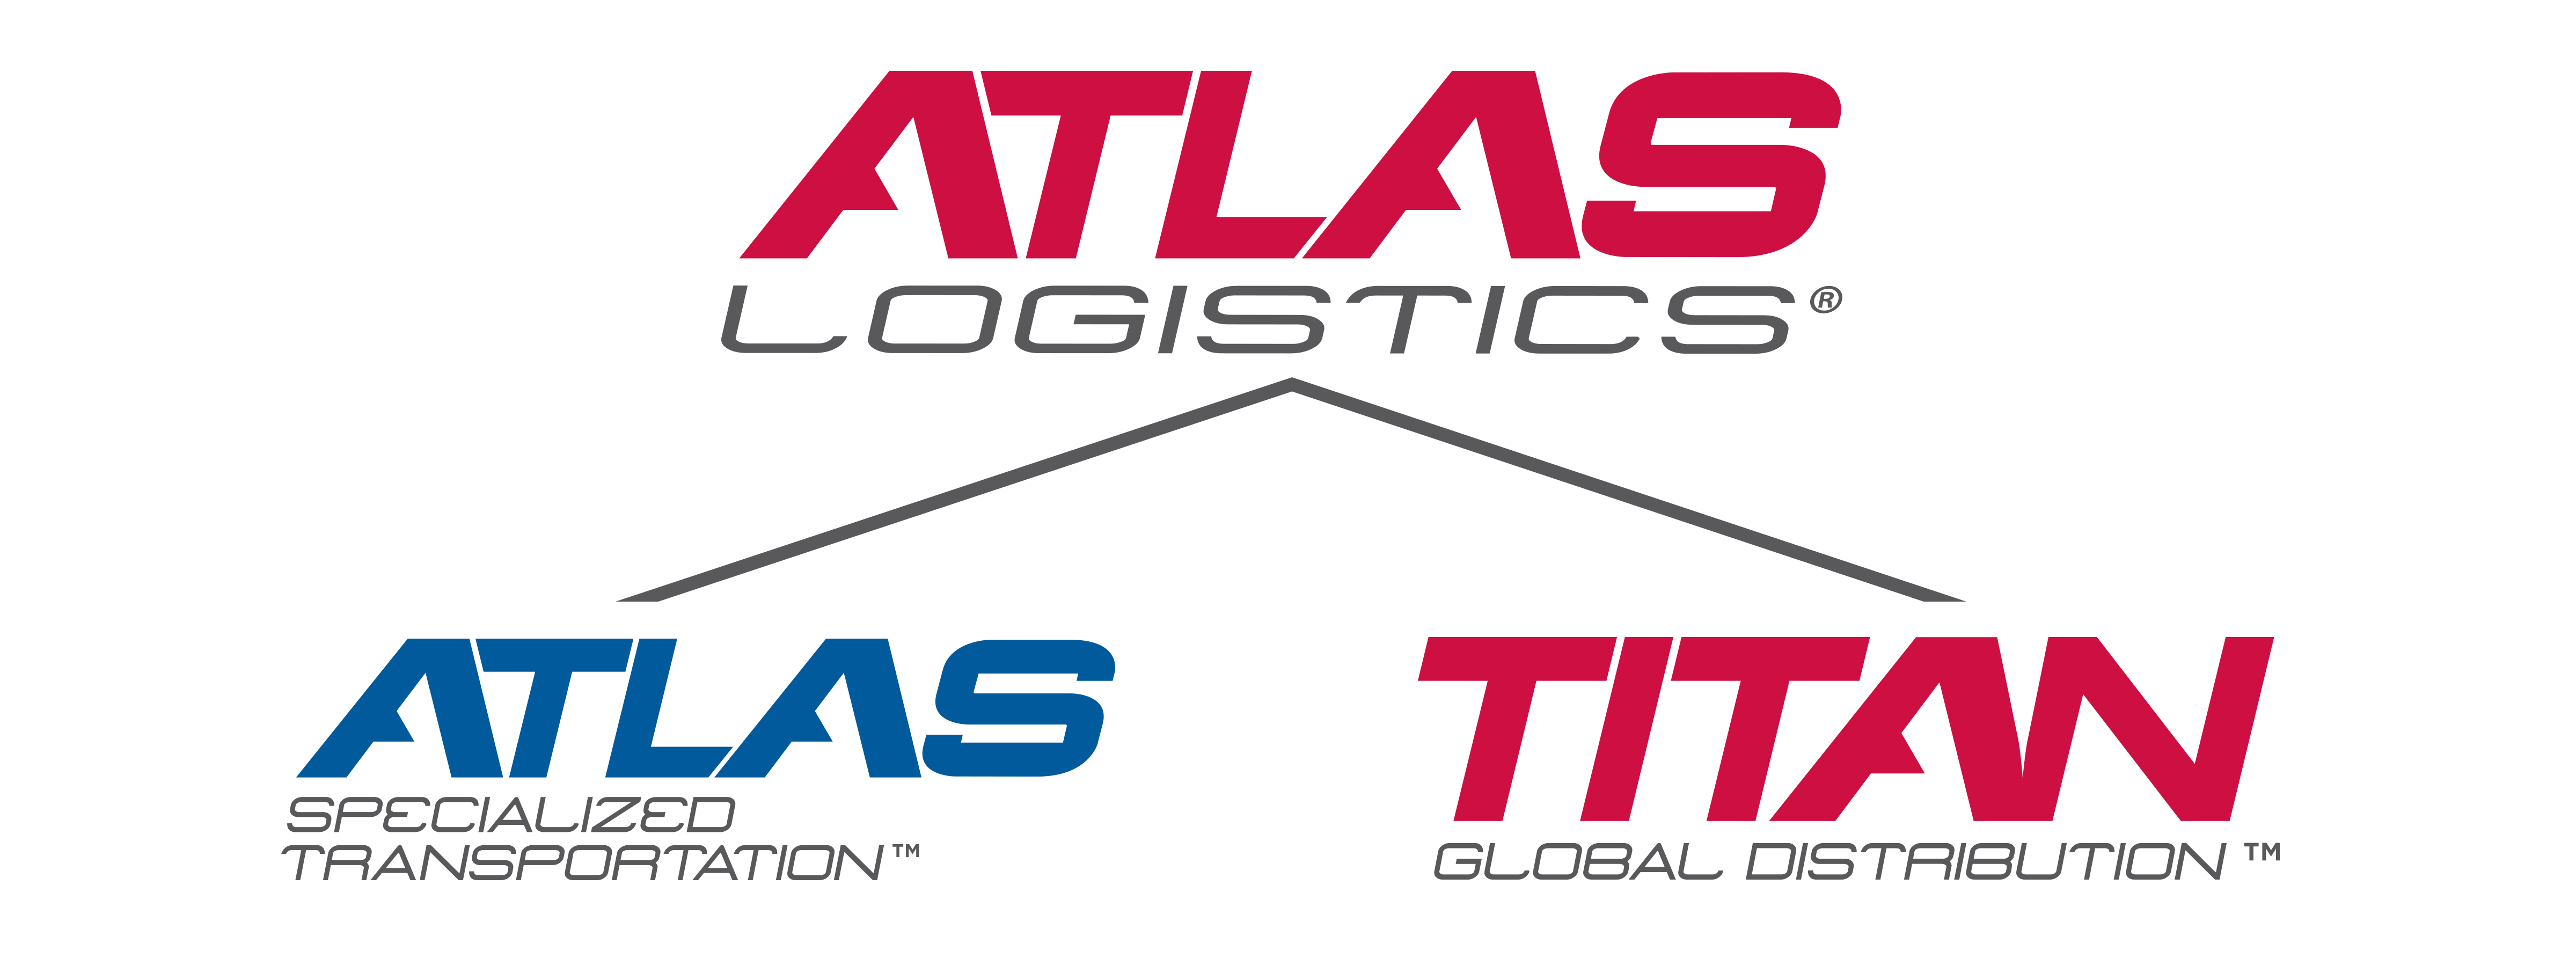 Atlas Logistics Tree